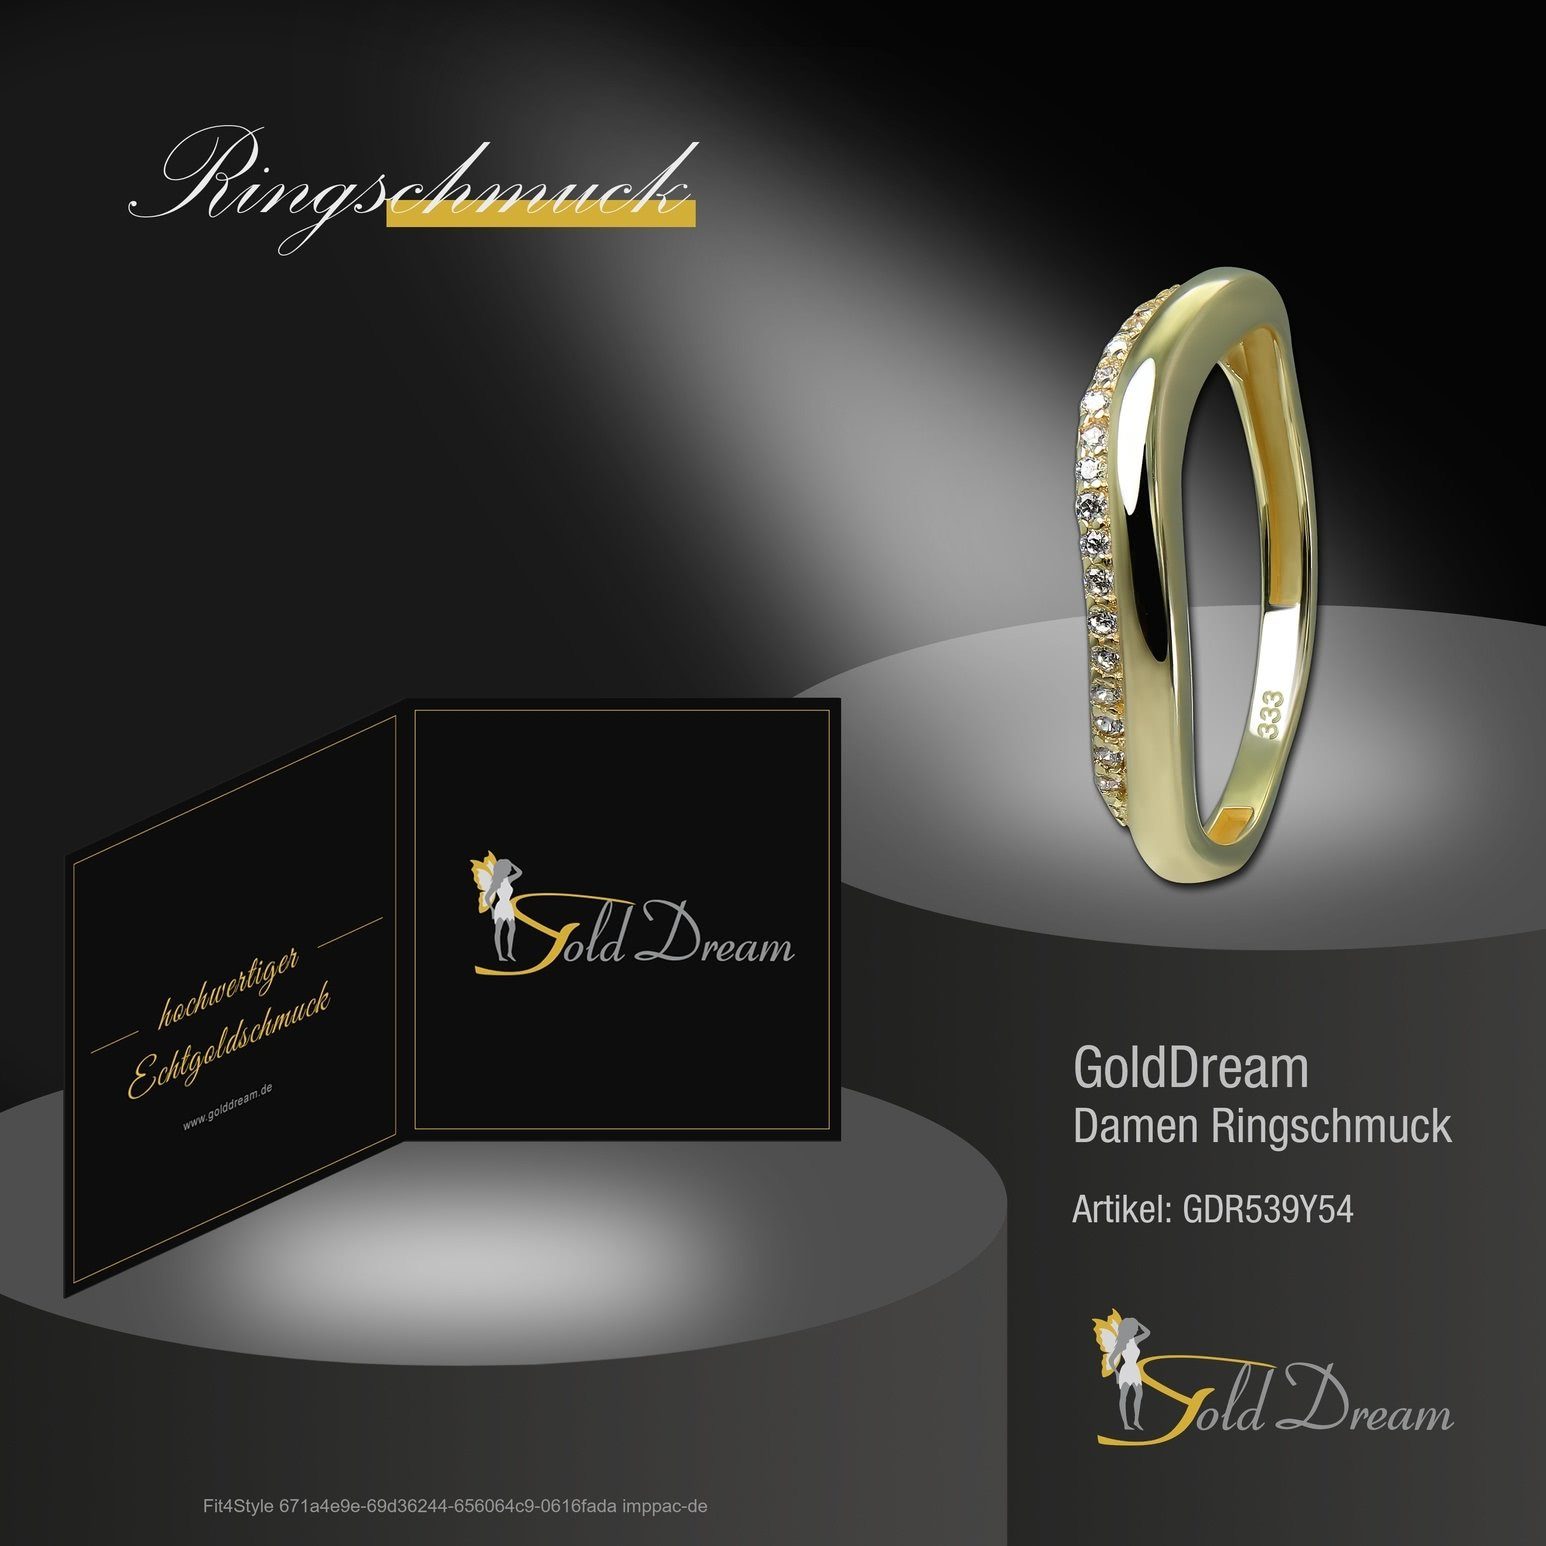 Karat, Farbe: gold, Gold Goldring GoldDream 333 Gr.54 GoldDream Welle (Fingerring), Gelbgold 8 Zirkonia - Ring Welle Damen Ring weiß